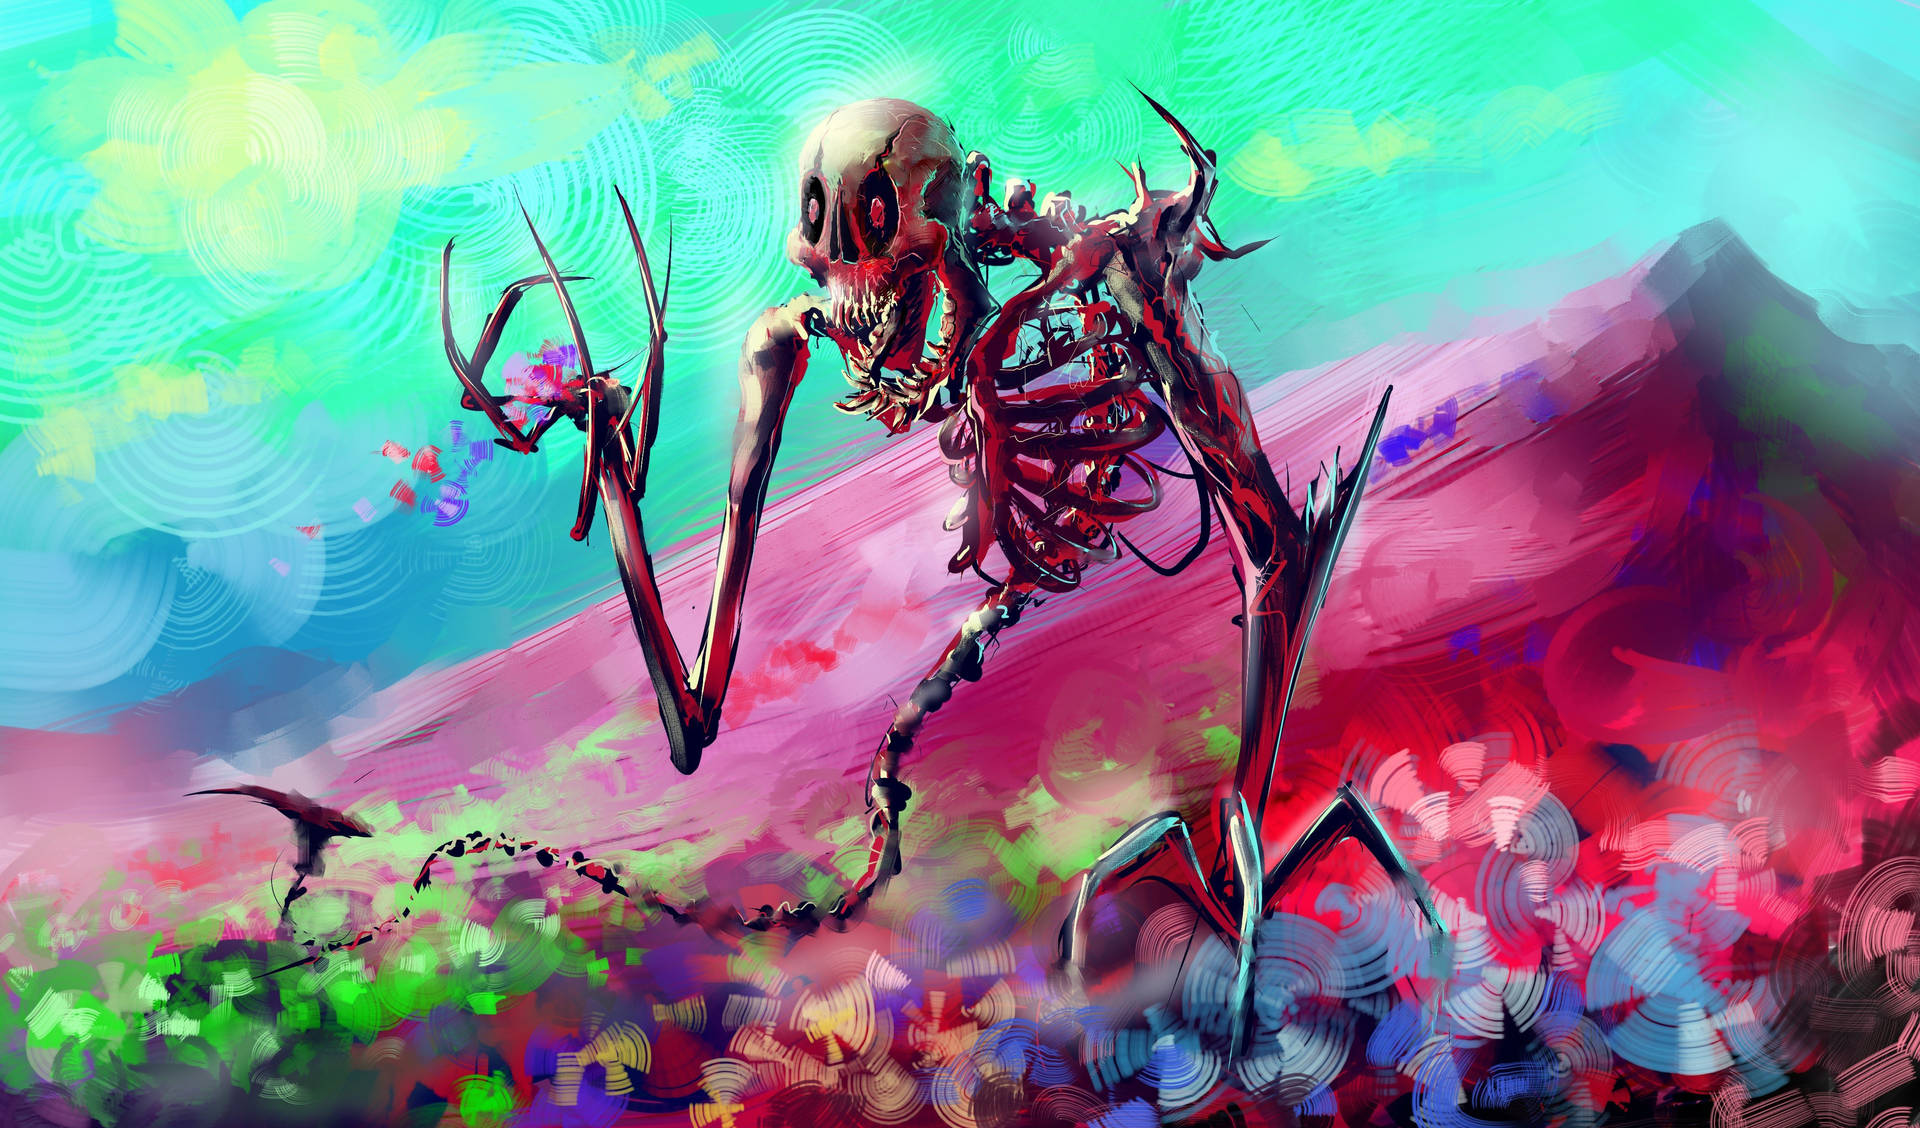 Vortigern Skeleton Painting Wallpaper